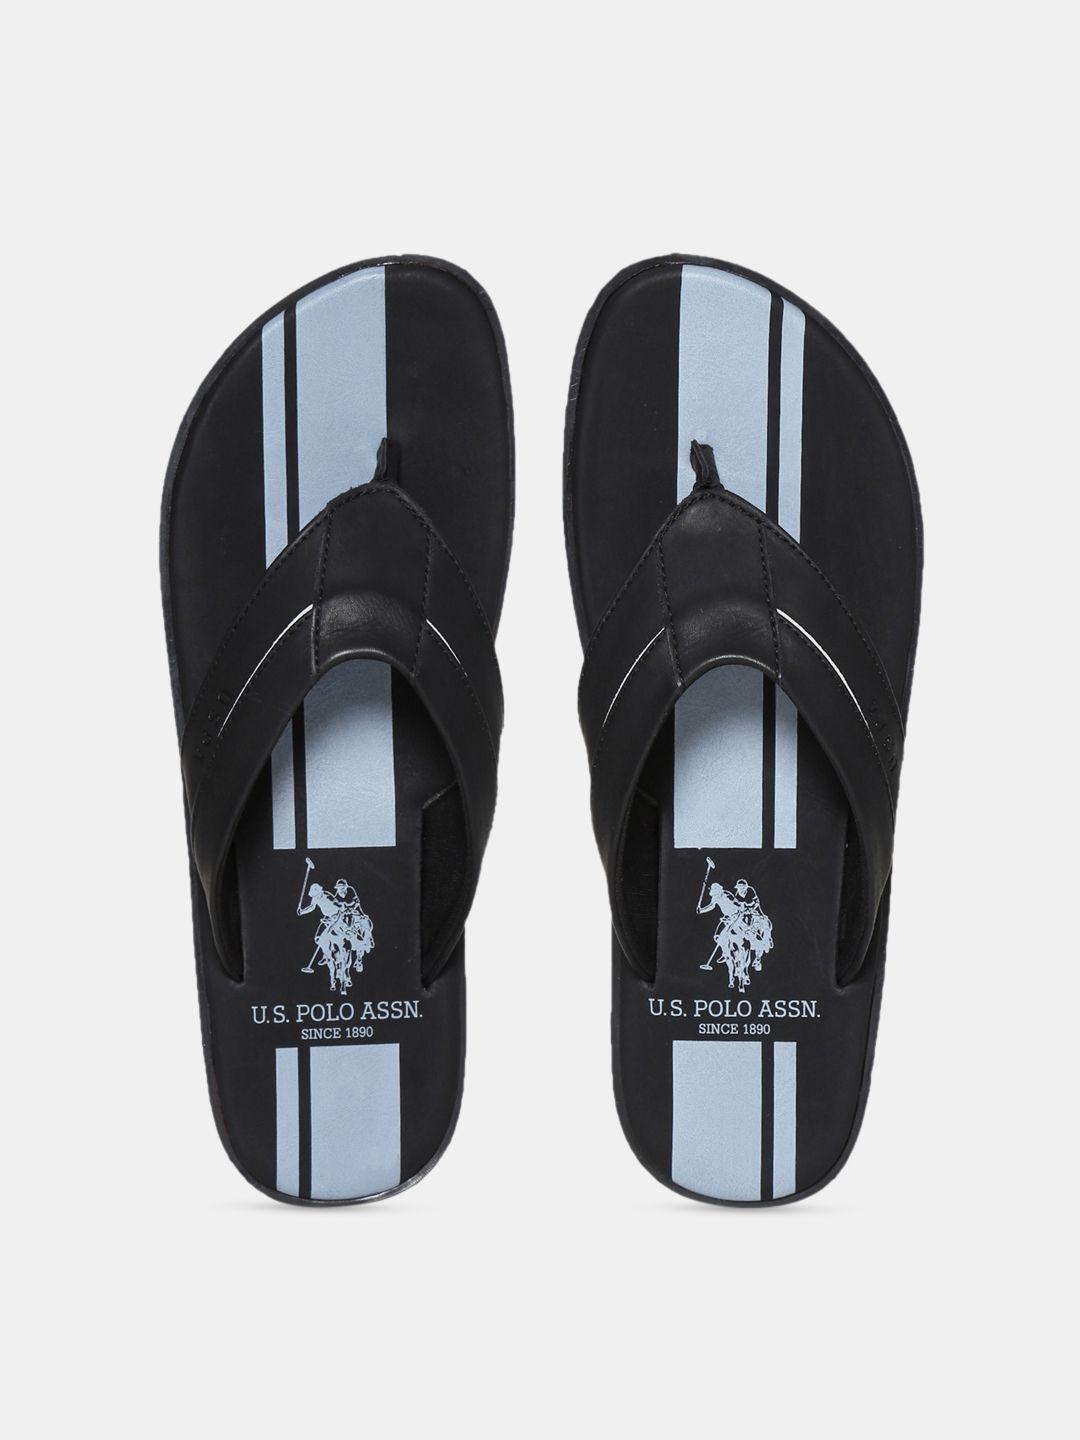 u.s. polo assn. men black comfort sandals